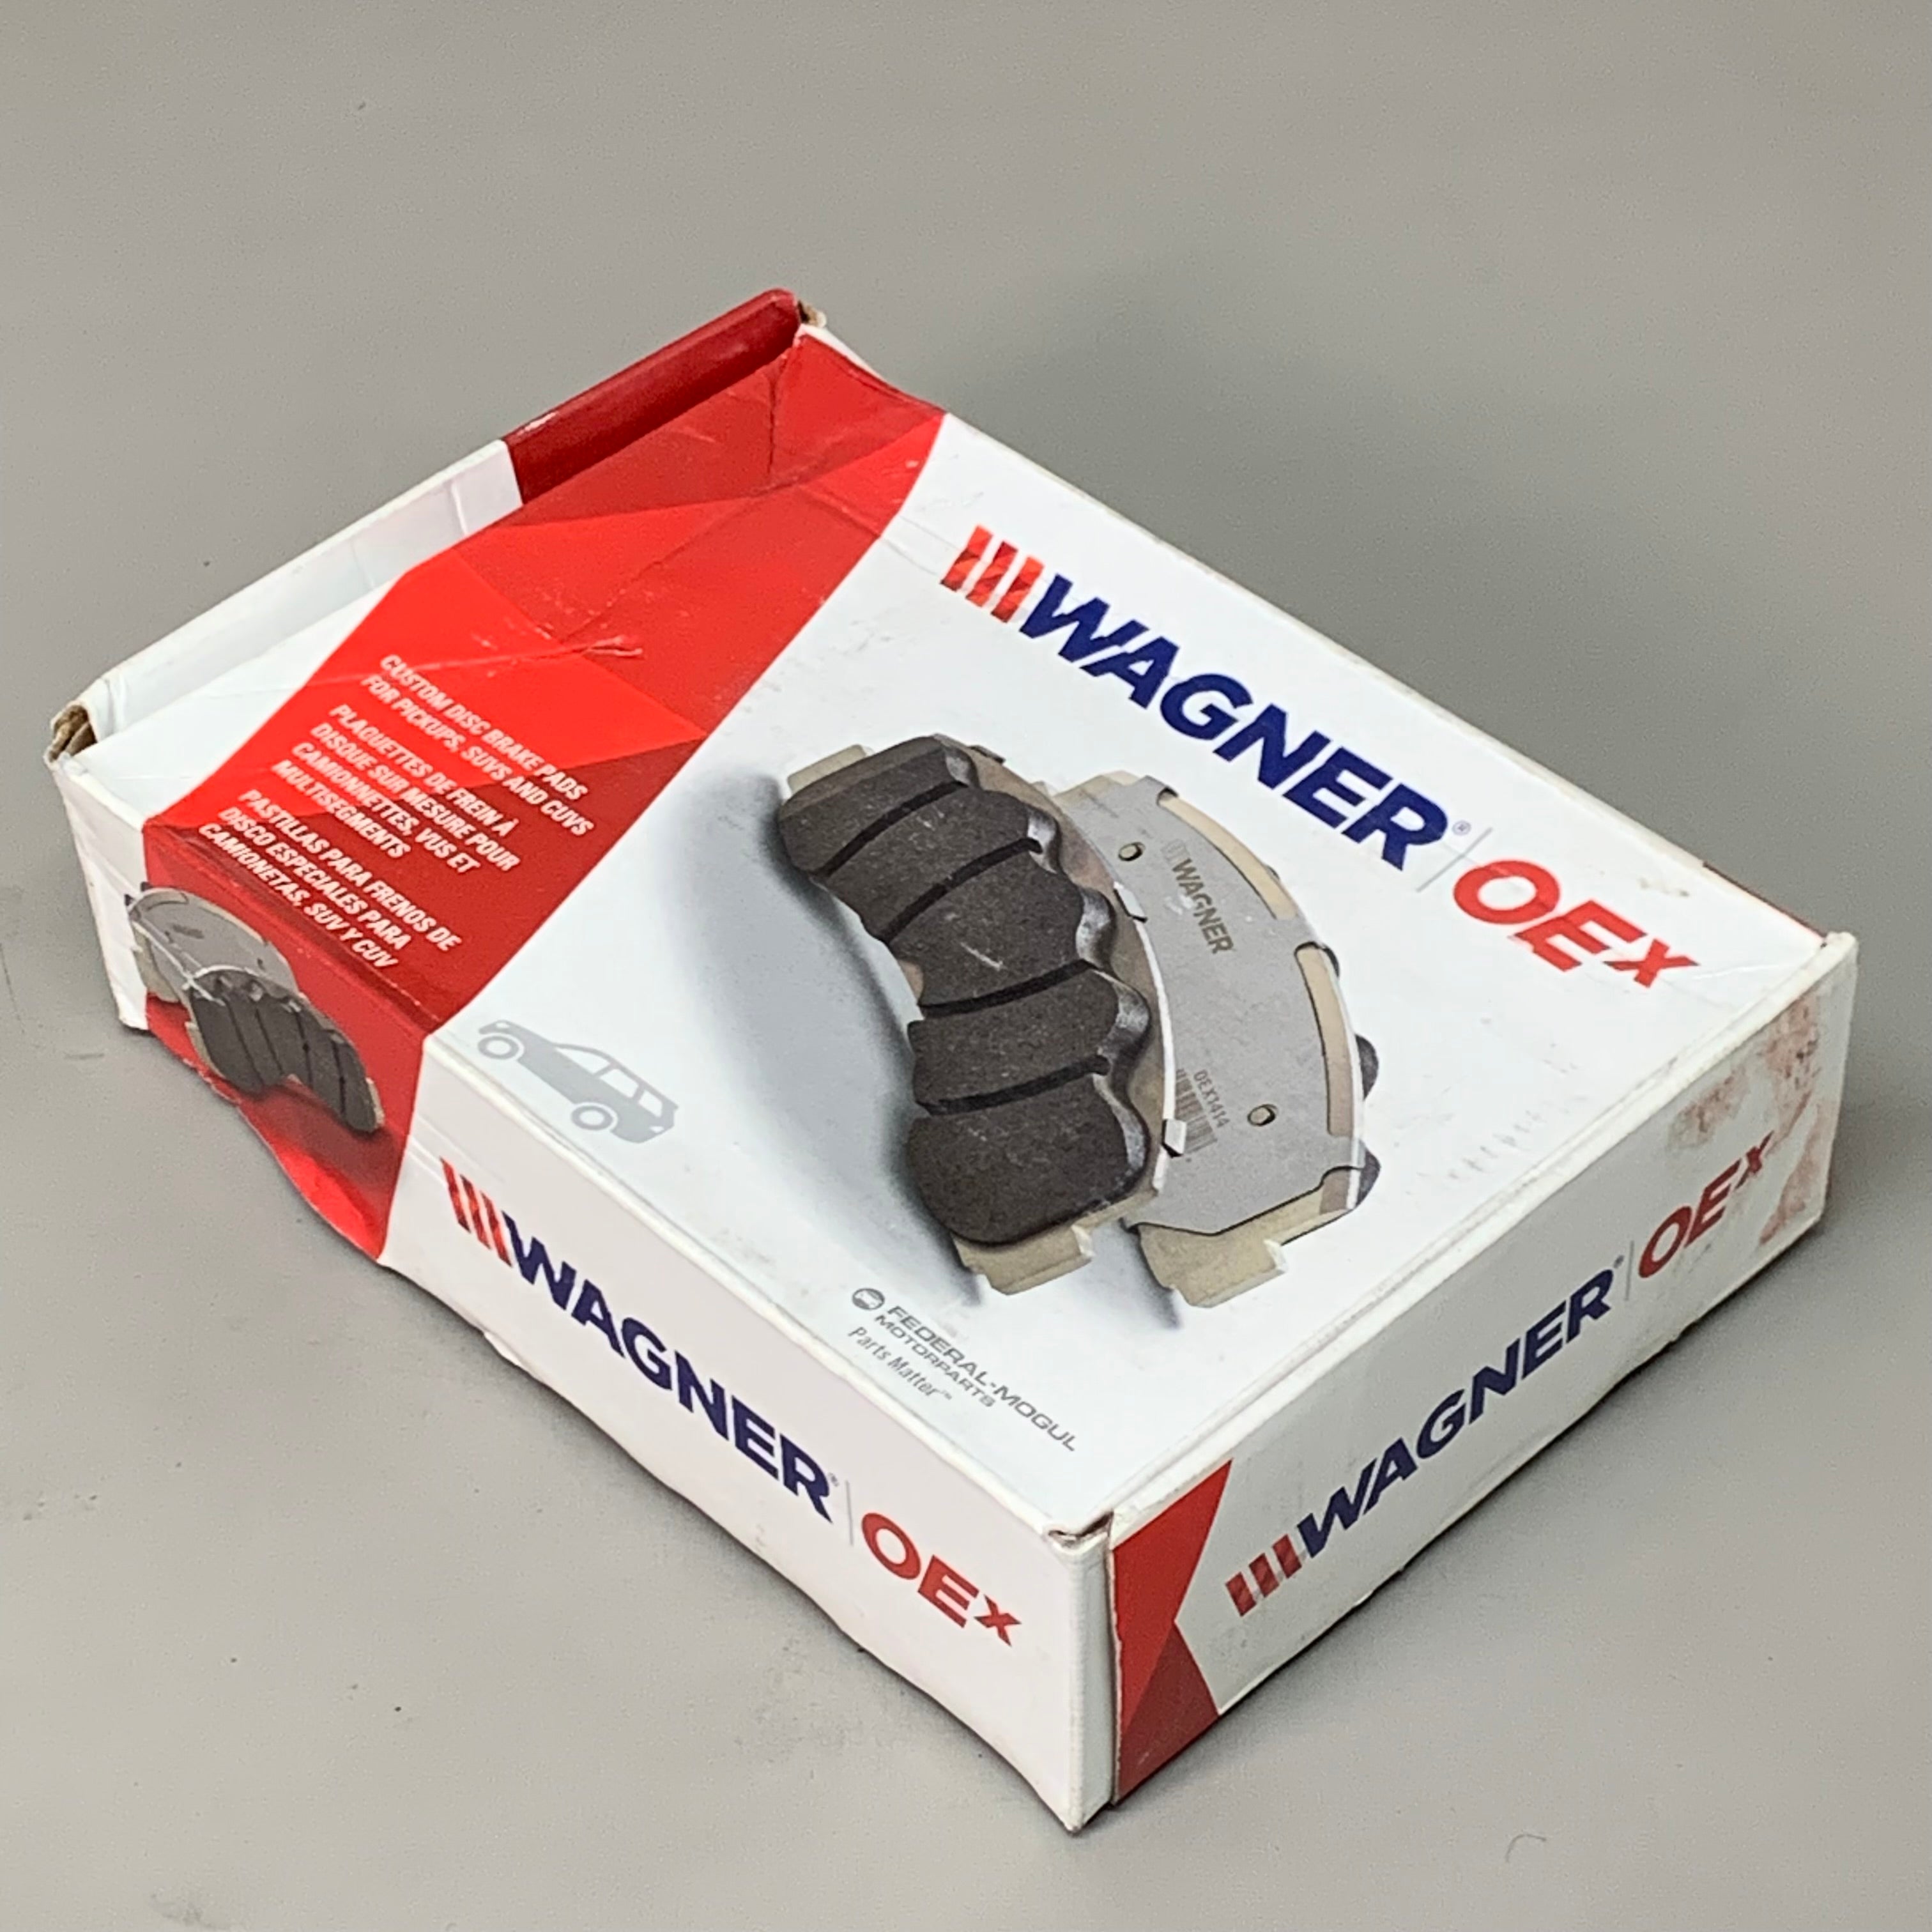 WAGNER OEx Premium Ceramic Disc Brake Pad Set 5 1/2